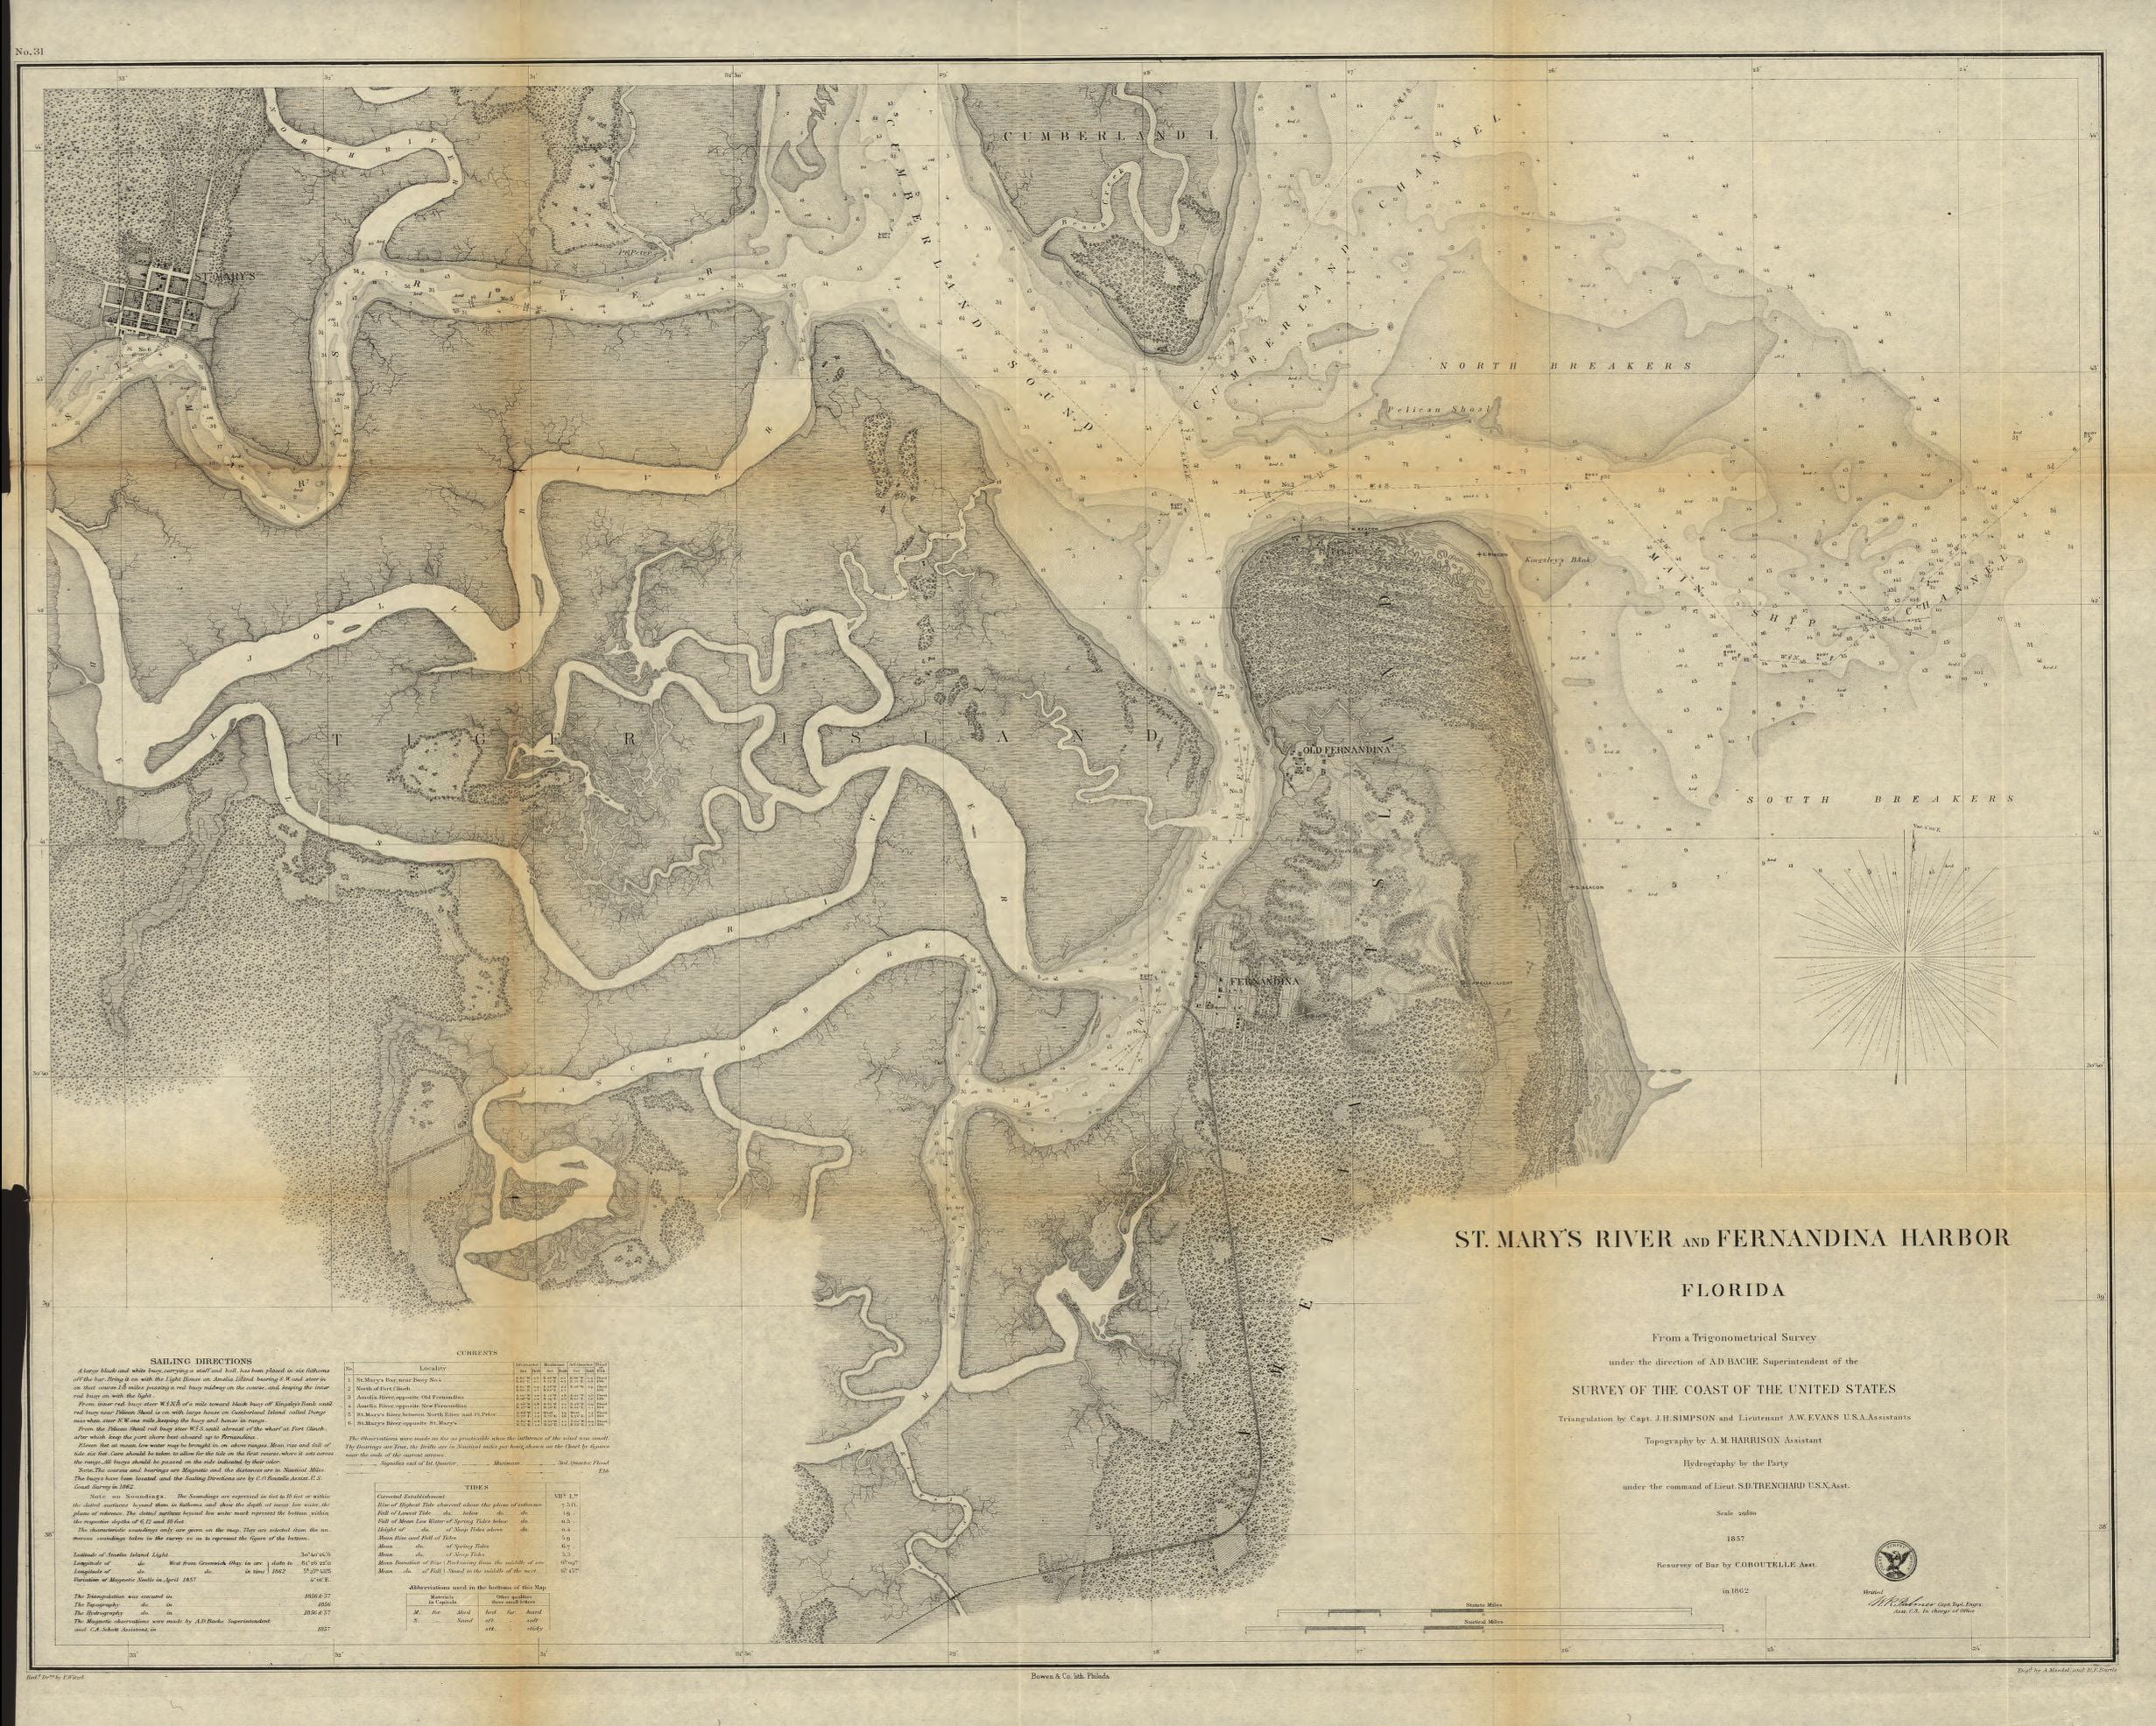 1862 St. Mary's River and Fernandina harbor, Florida